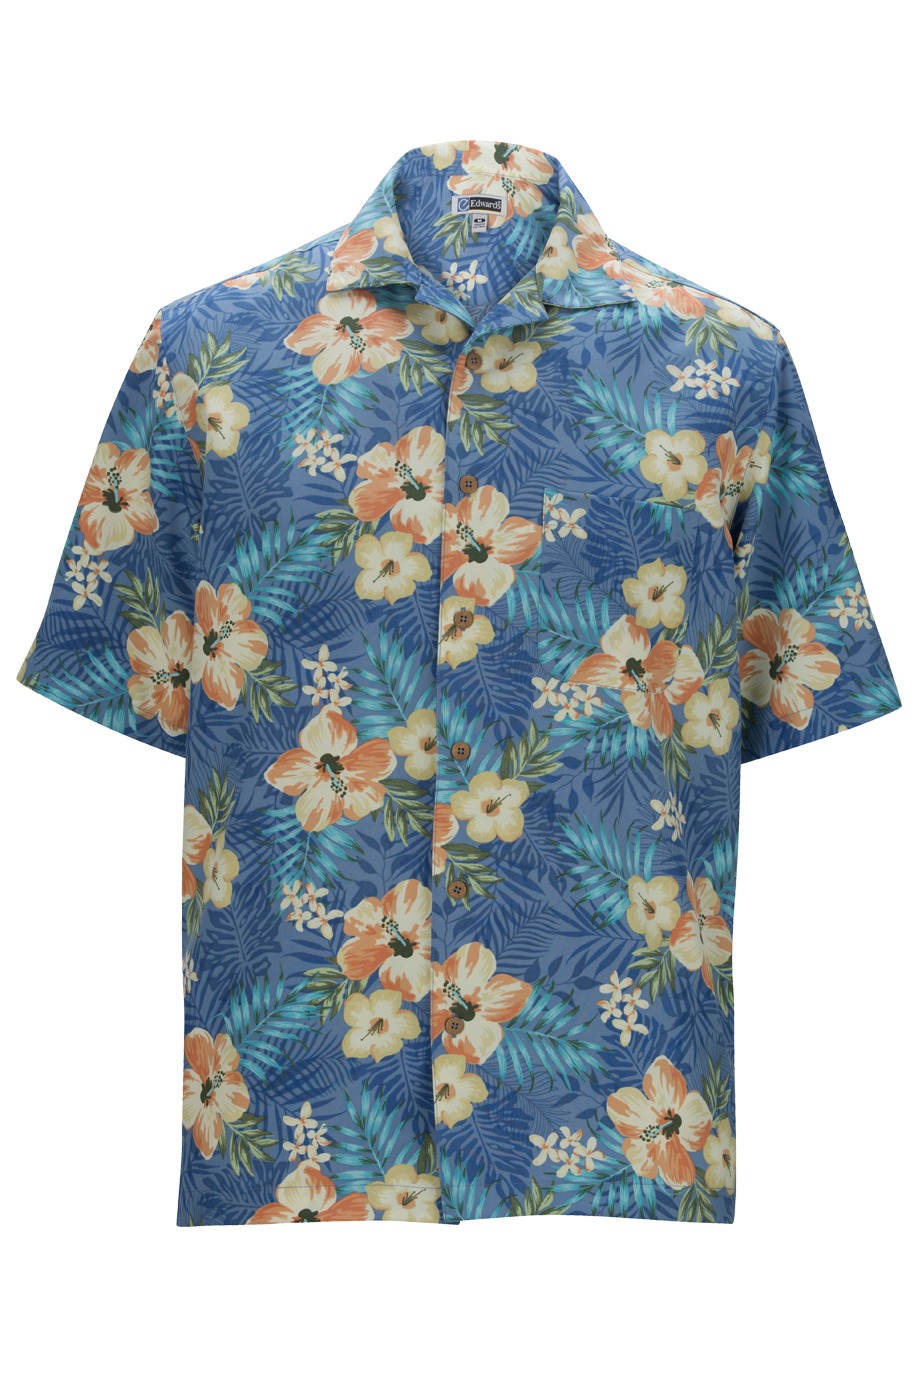 Edwards Garment 1035 - Tropical Hibiscus Camp Shirt